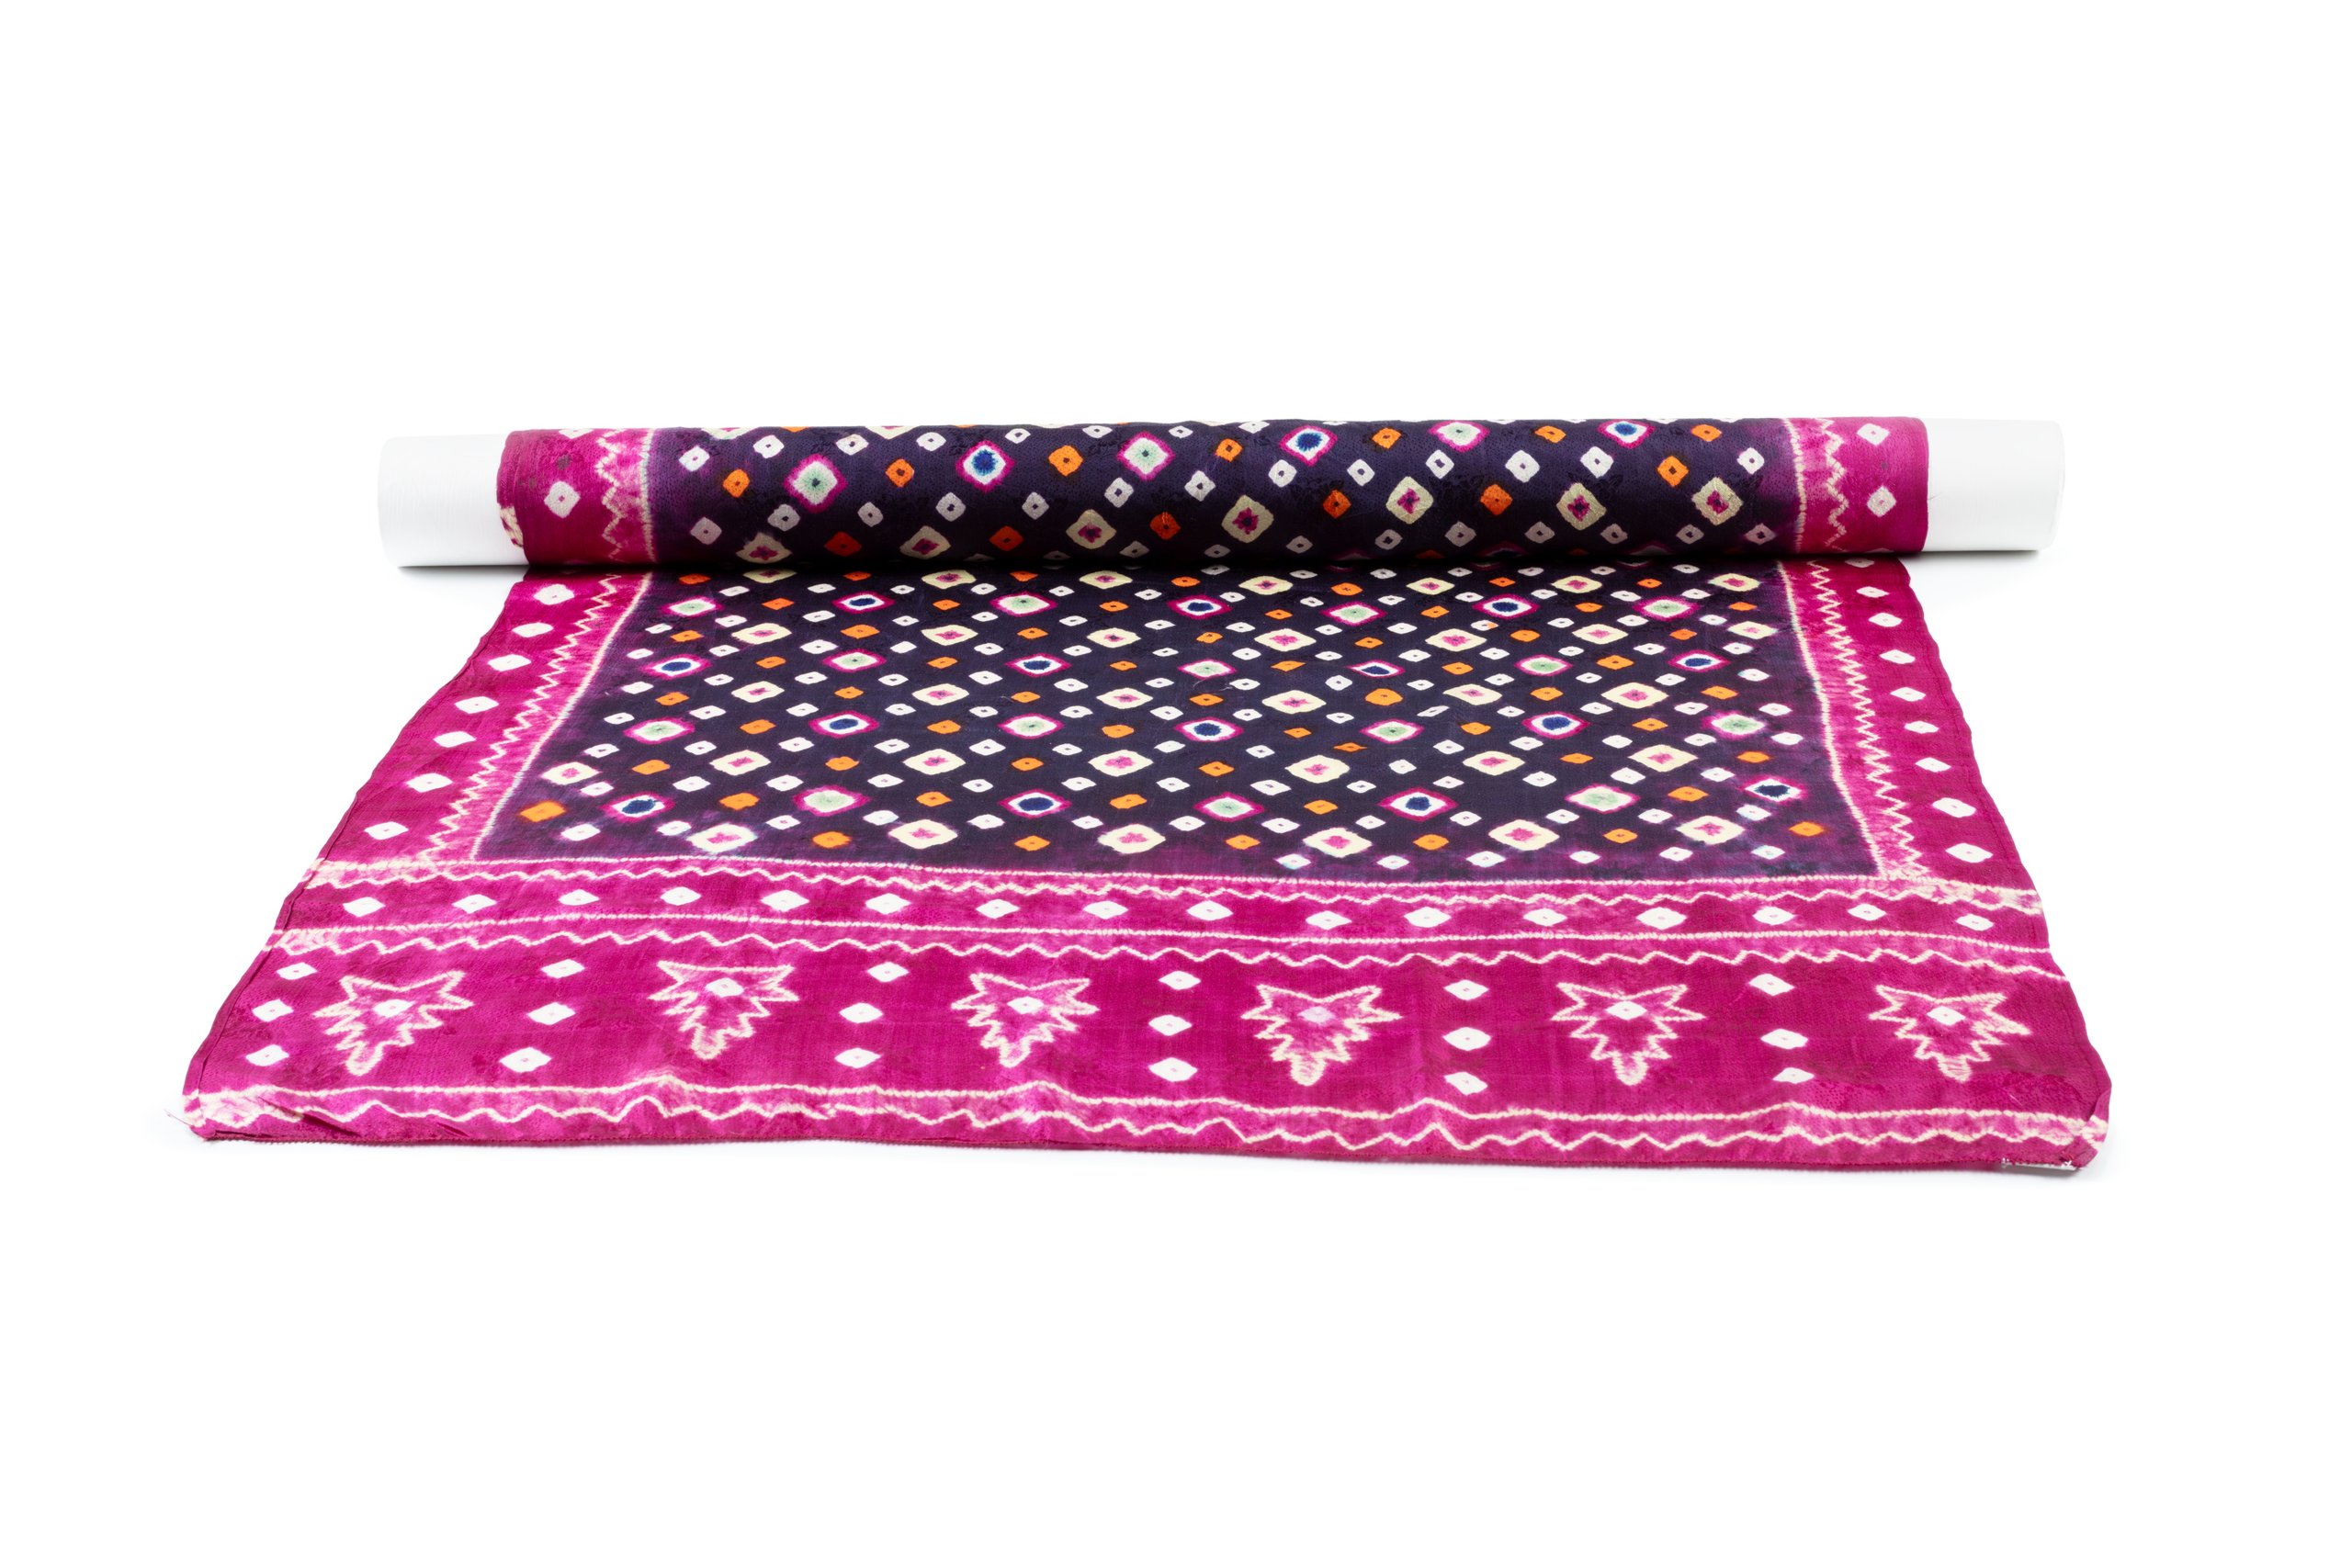 Batik textile from Cambodia